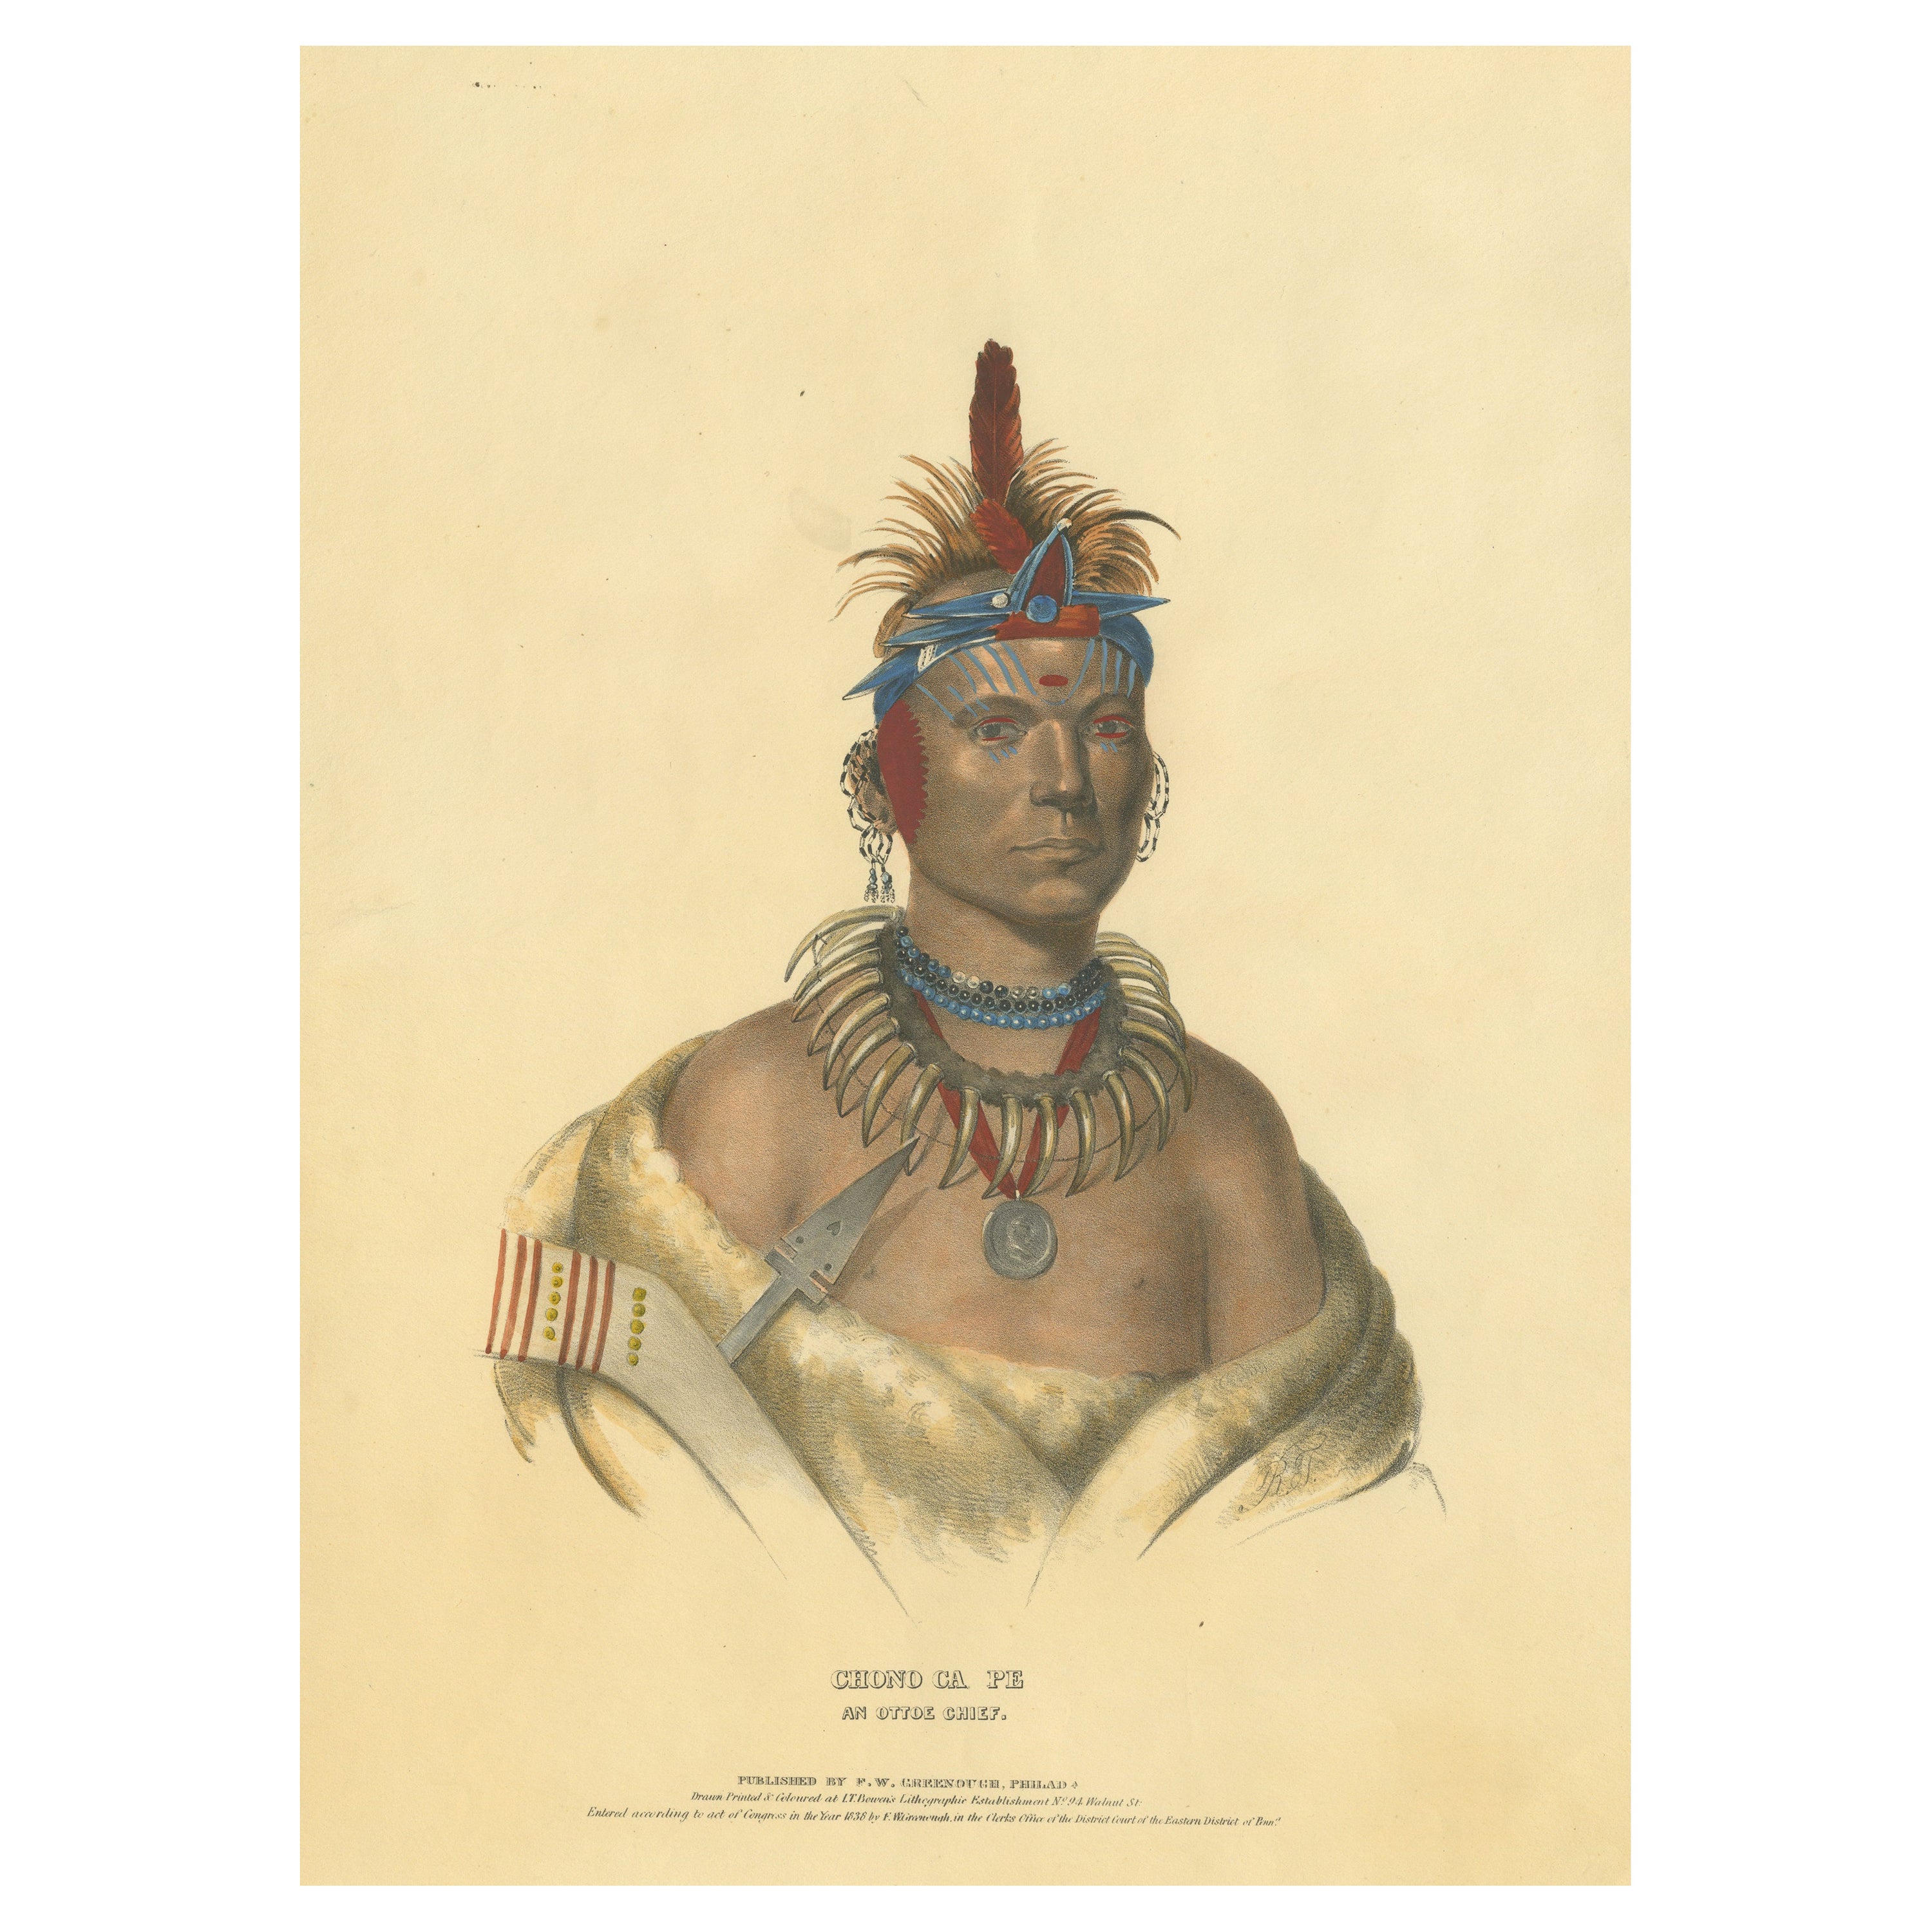 Large Antique Print of Chono Ca Pe, an Otoe Chief, circa 1838